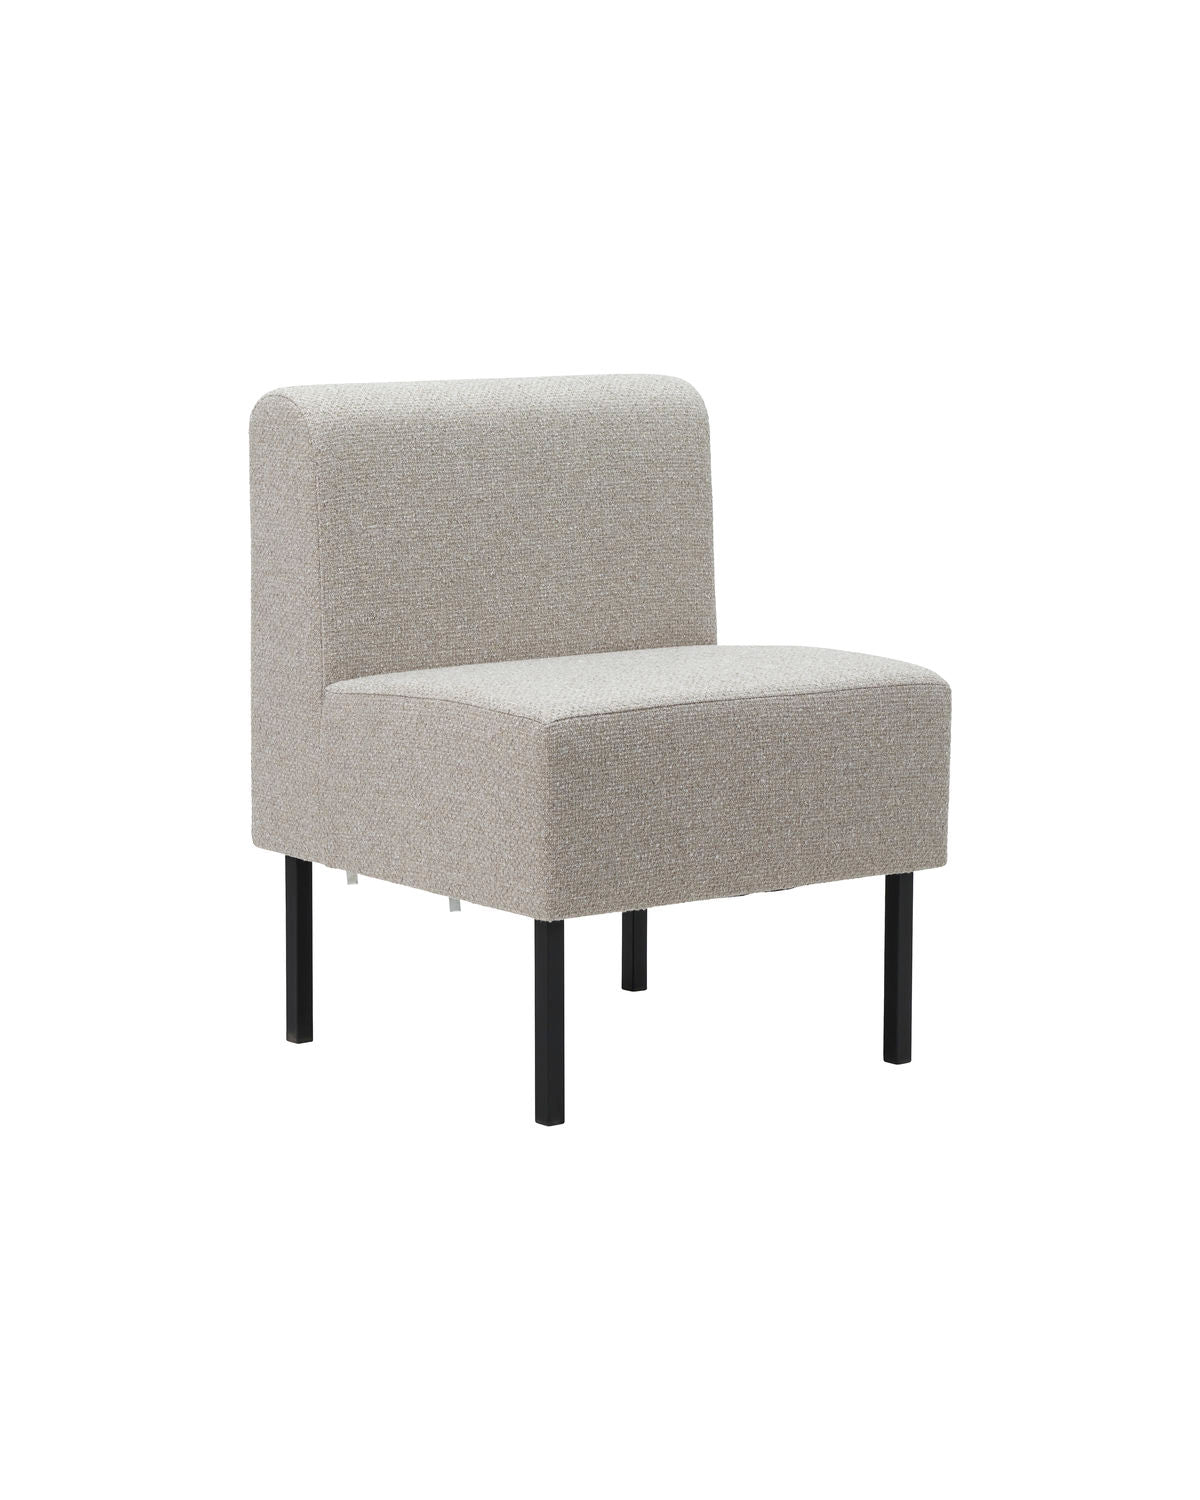 Sofa, Natur, 1 seater - KAQTU Design